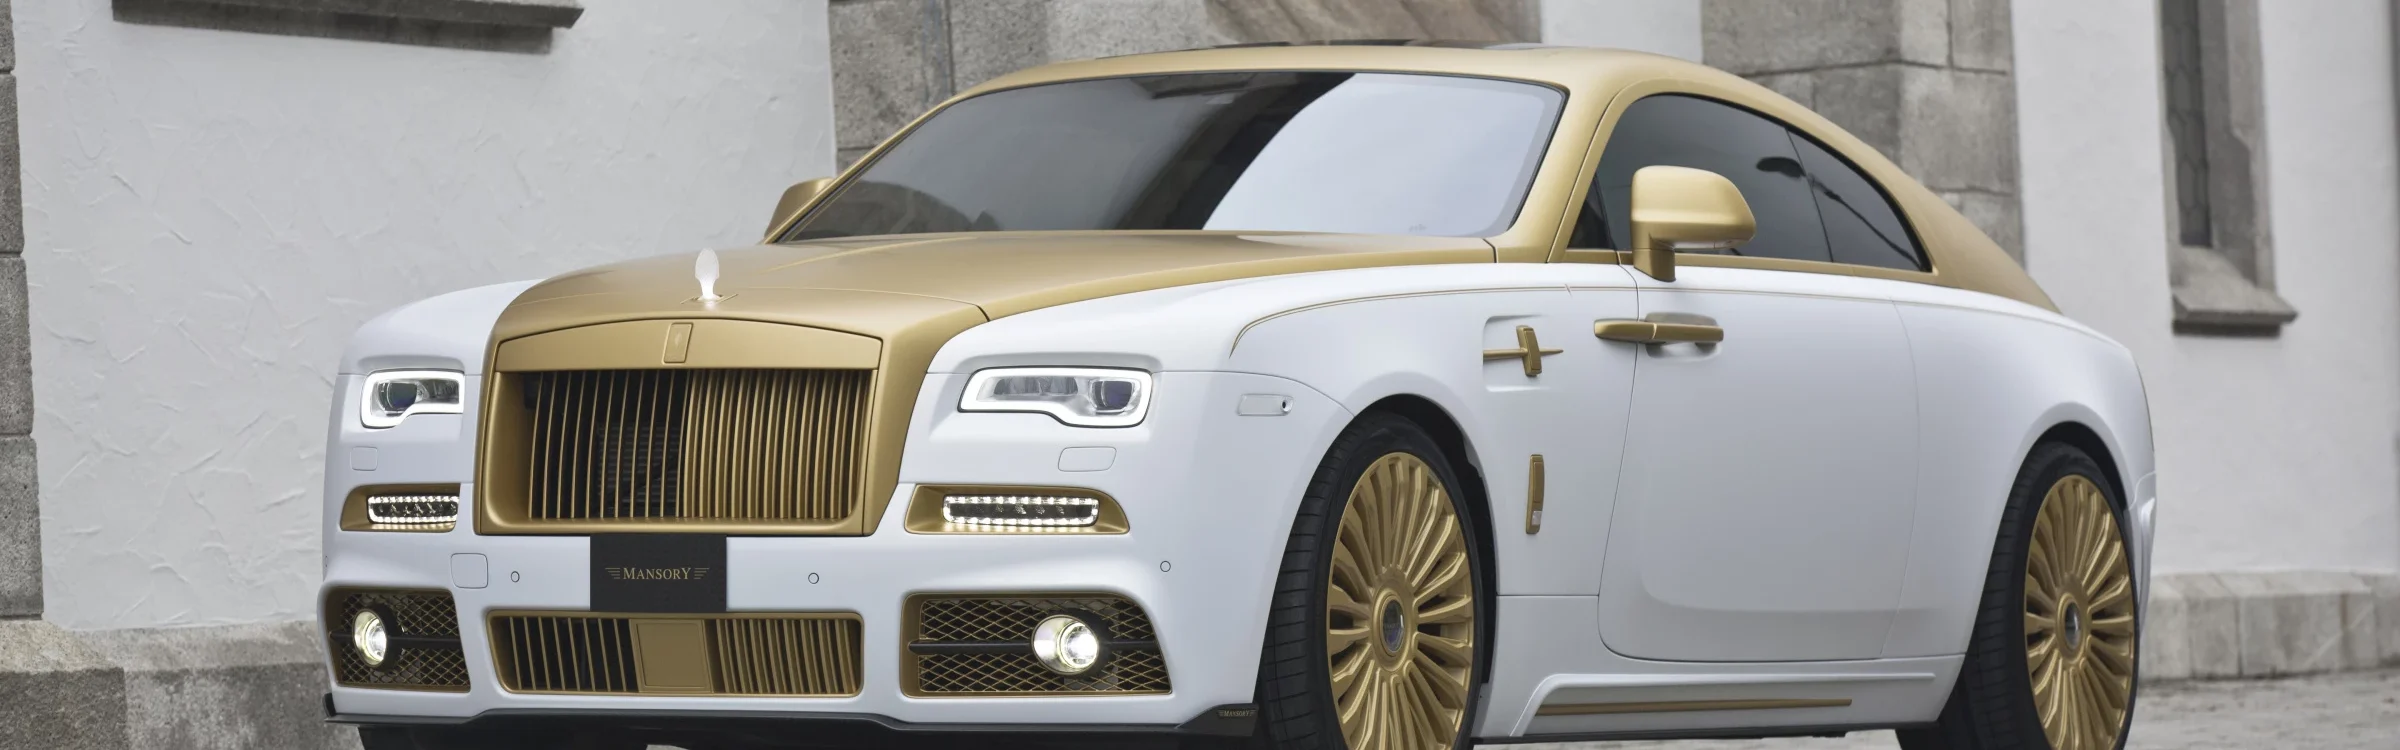 luxury car brands-RR